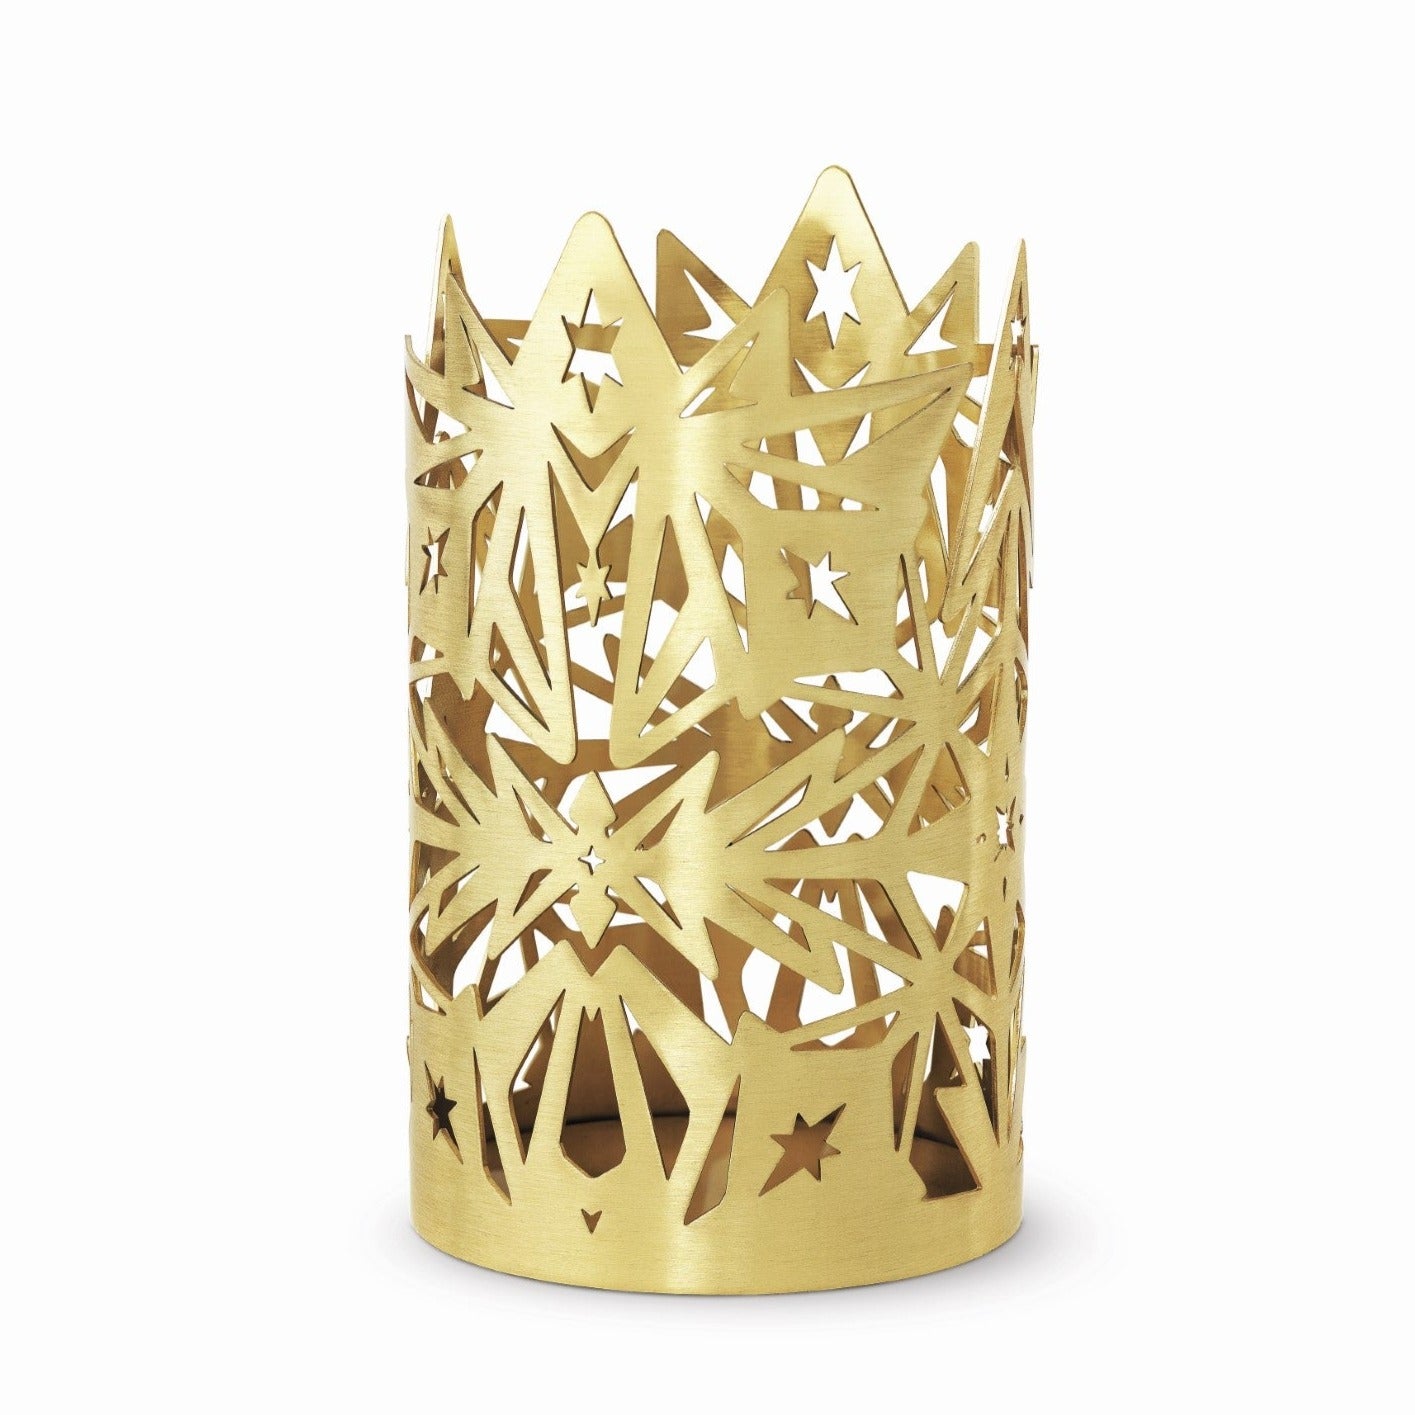 Karen Blixen Candleholder Gold - Large